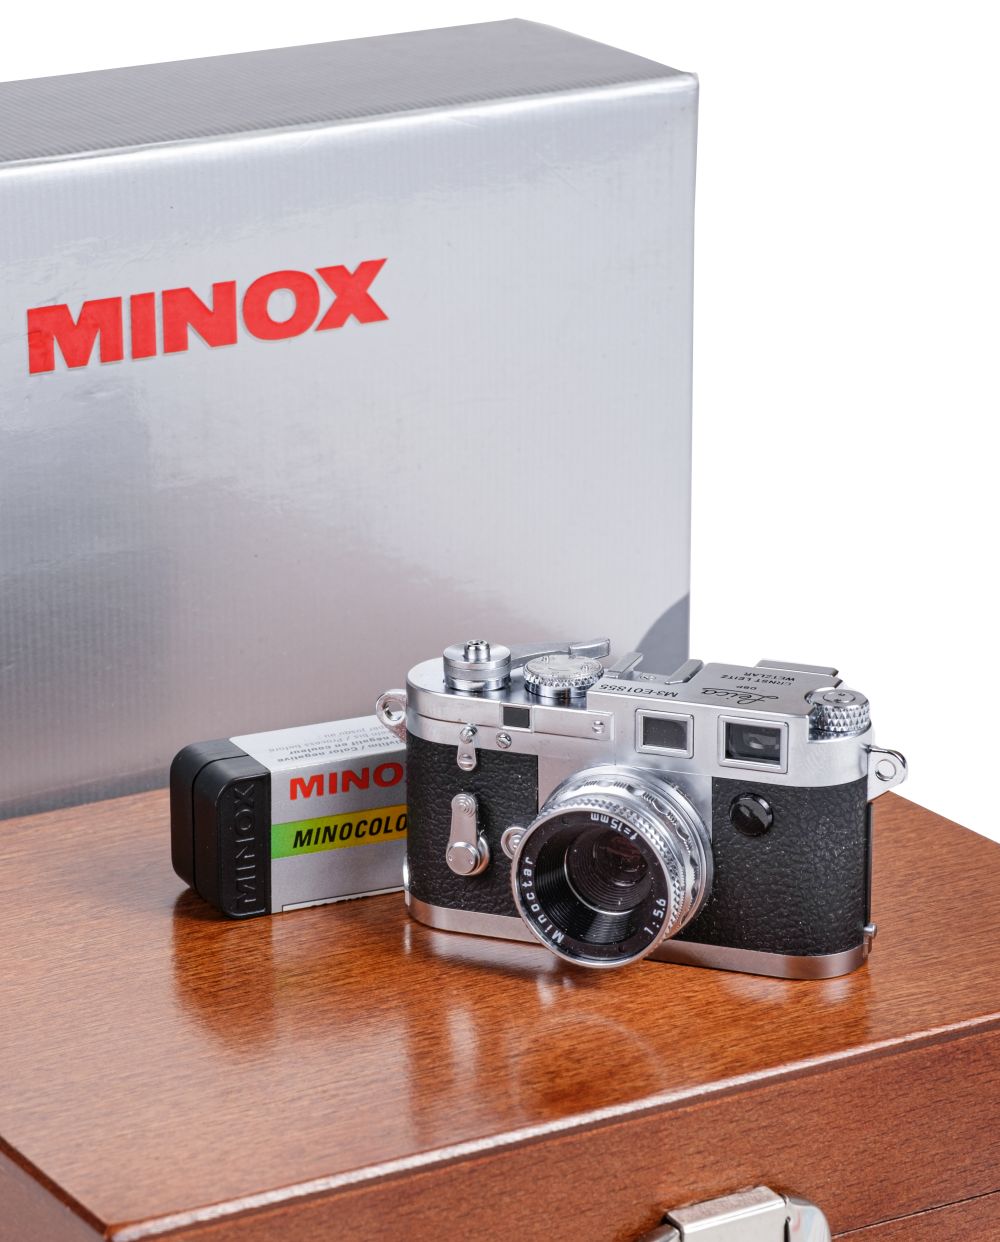 Minox. Miniature Leica M3 film camera, manufactured in Japan for Minox GmbH